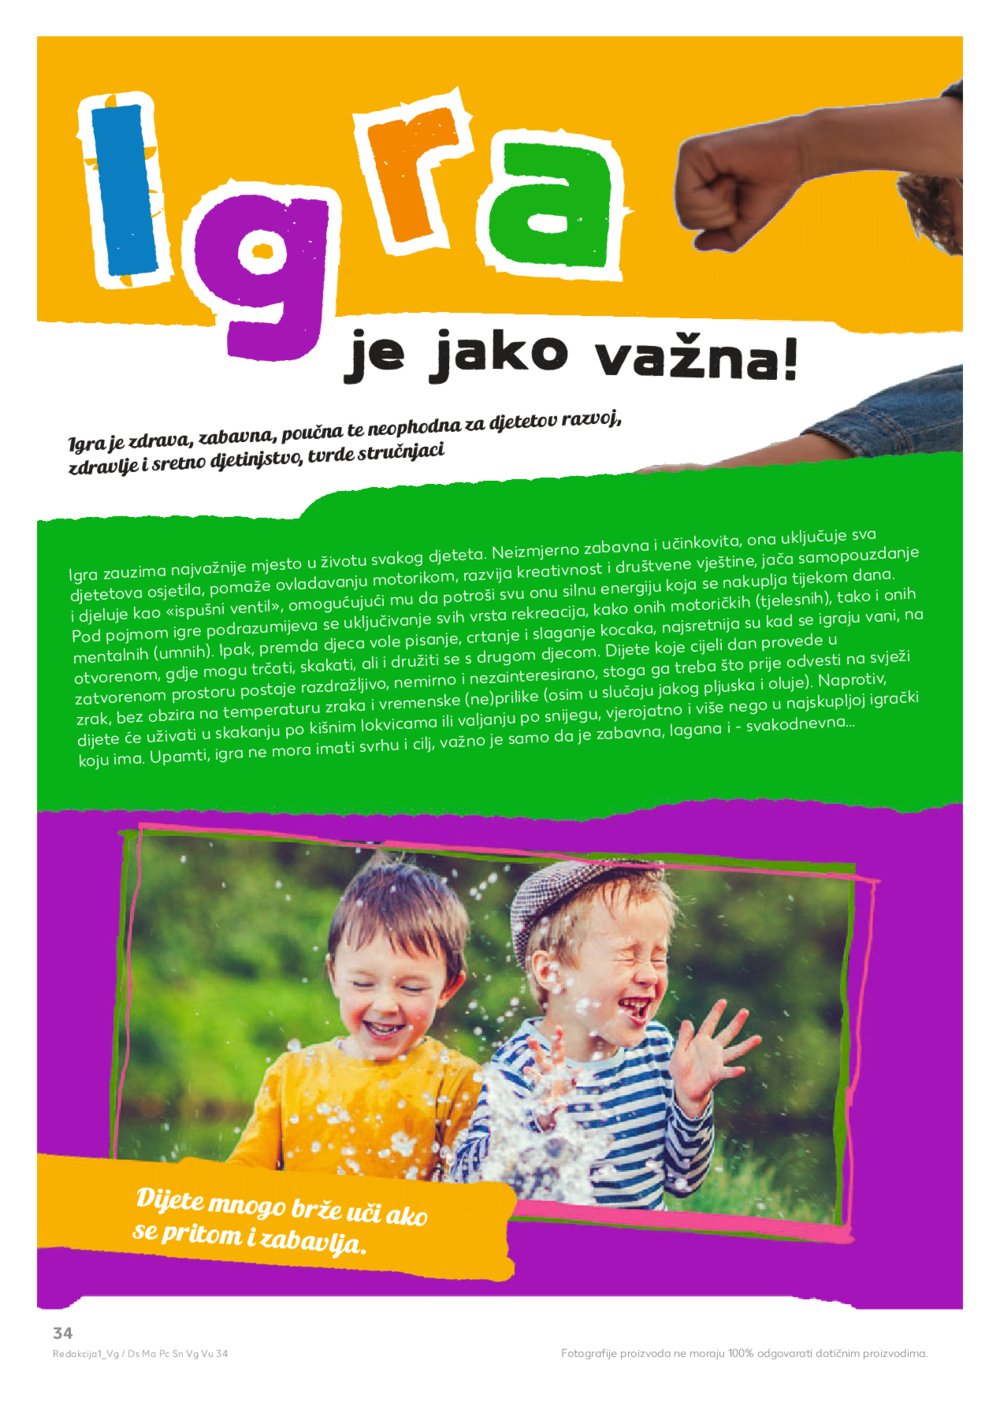 Kaufland katalog Akcija 11.7.-17.7.2019. Vukovara